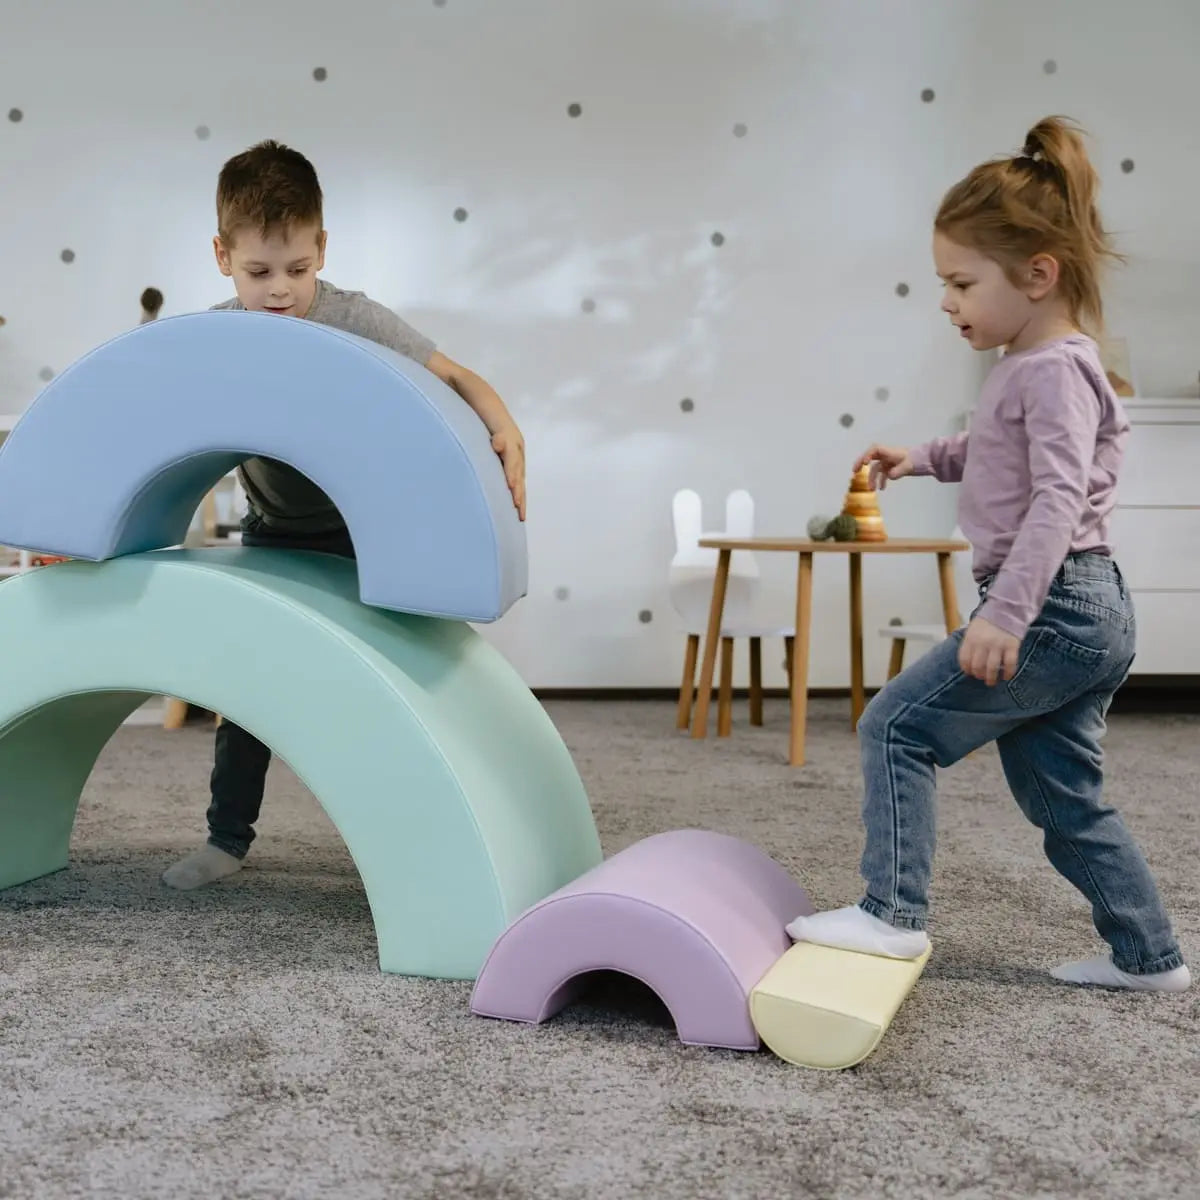 Montessori Soft Play Set - Rainbow